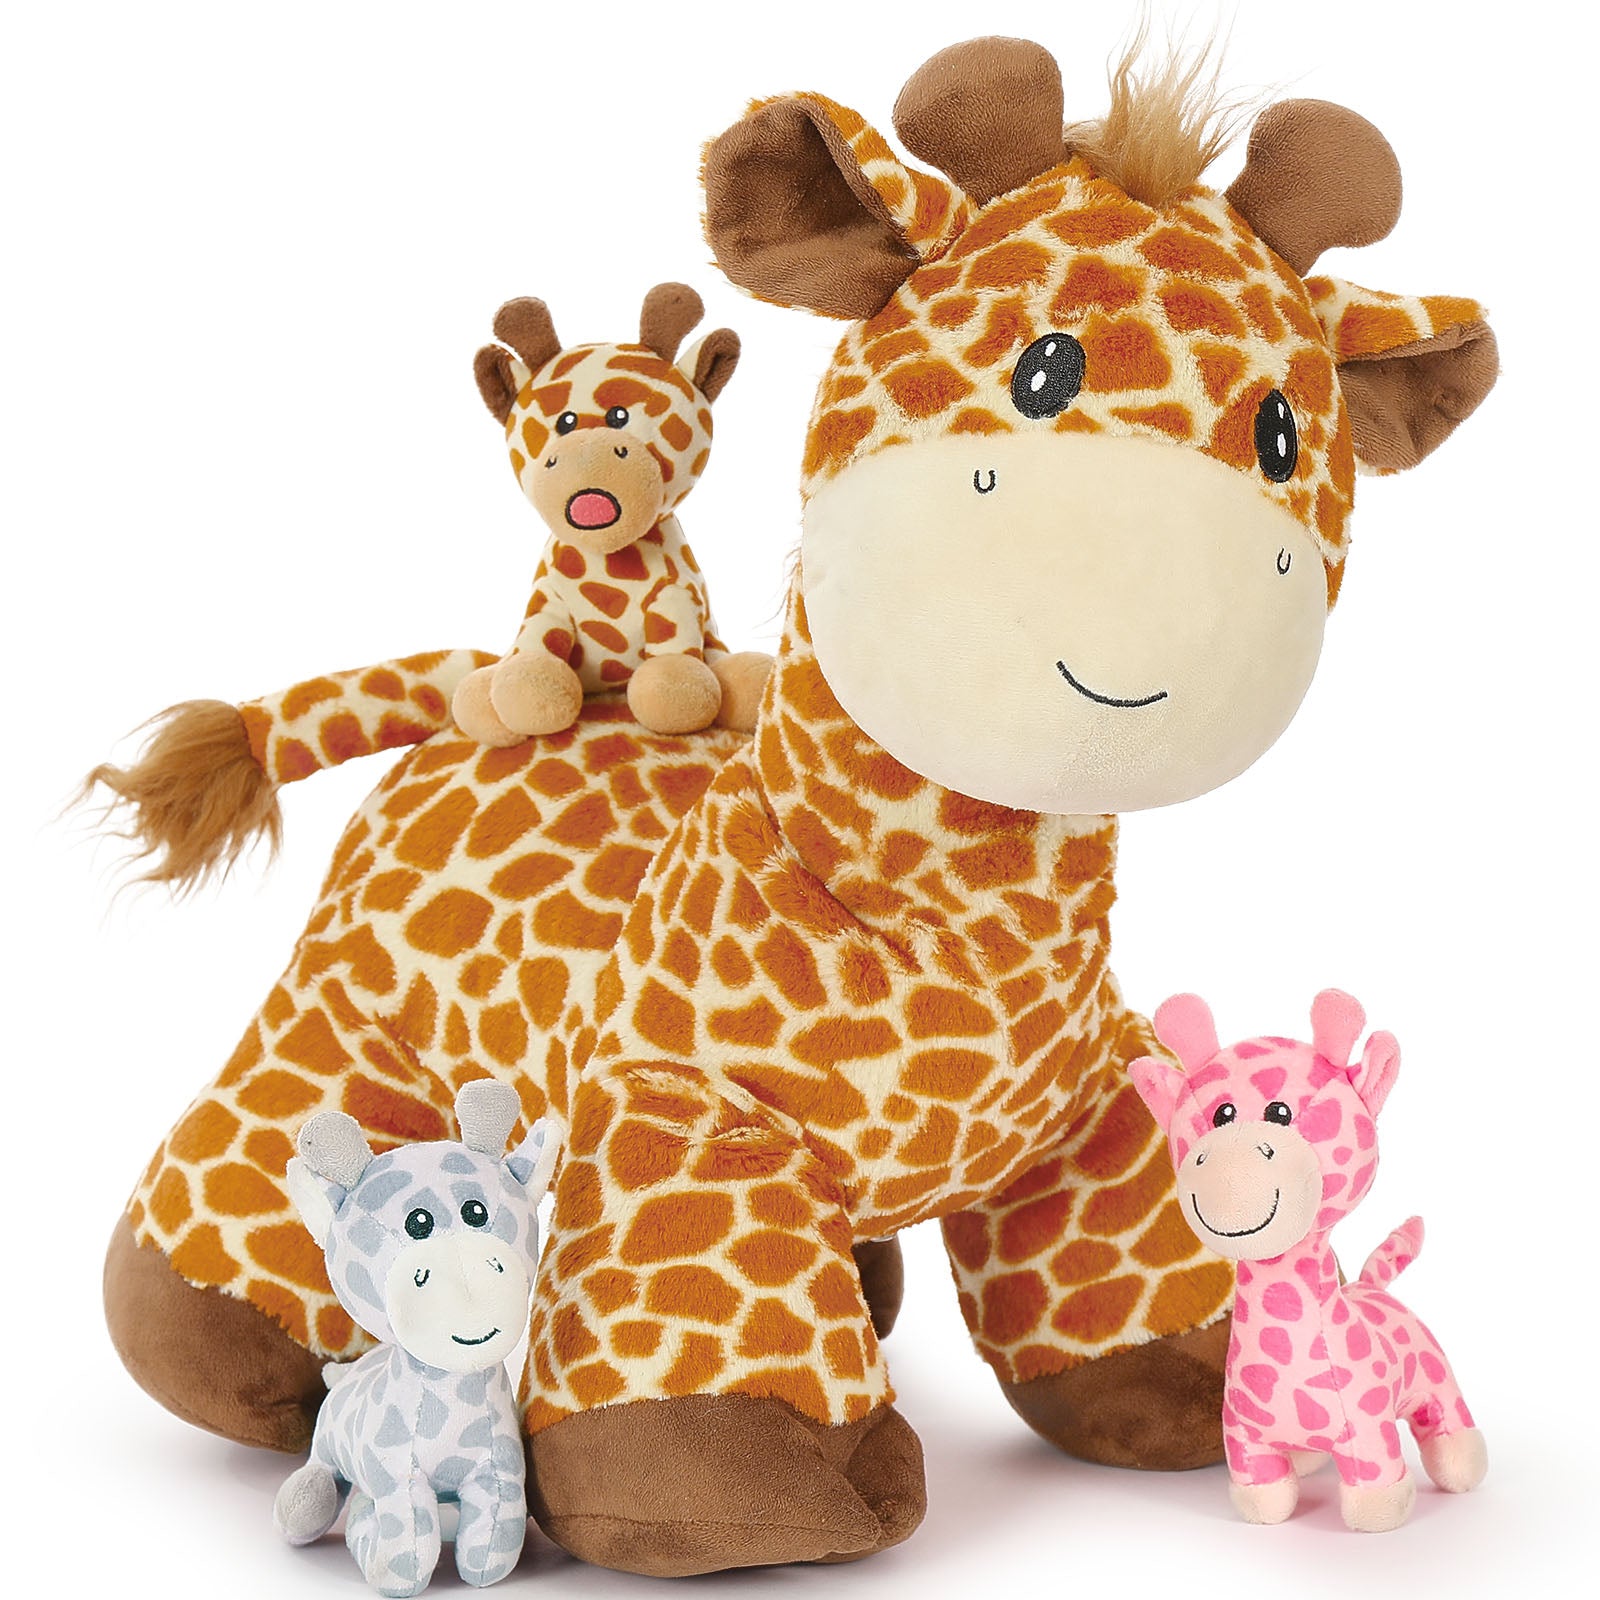 Giraffe Plush Toys Jungle Stuffed Animals, 18 Inches